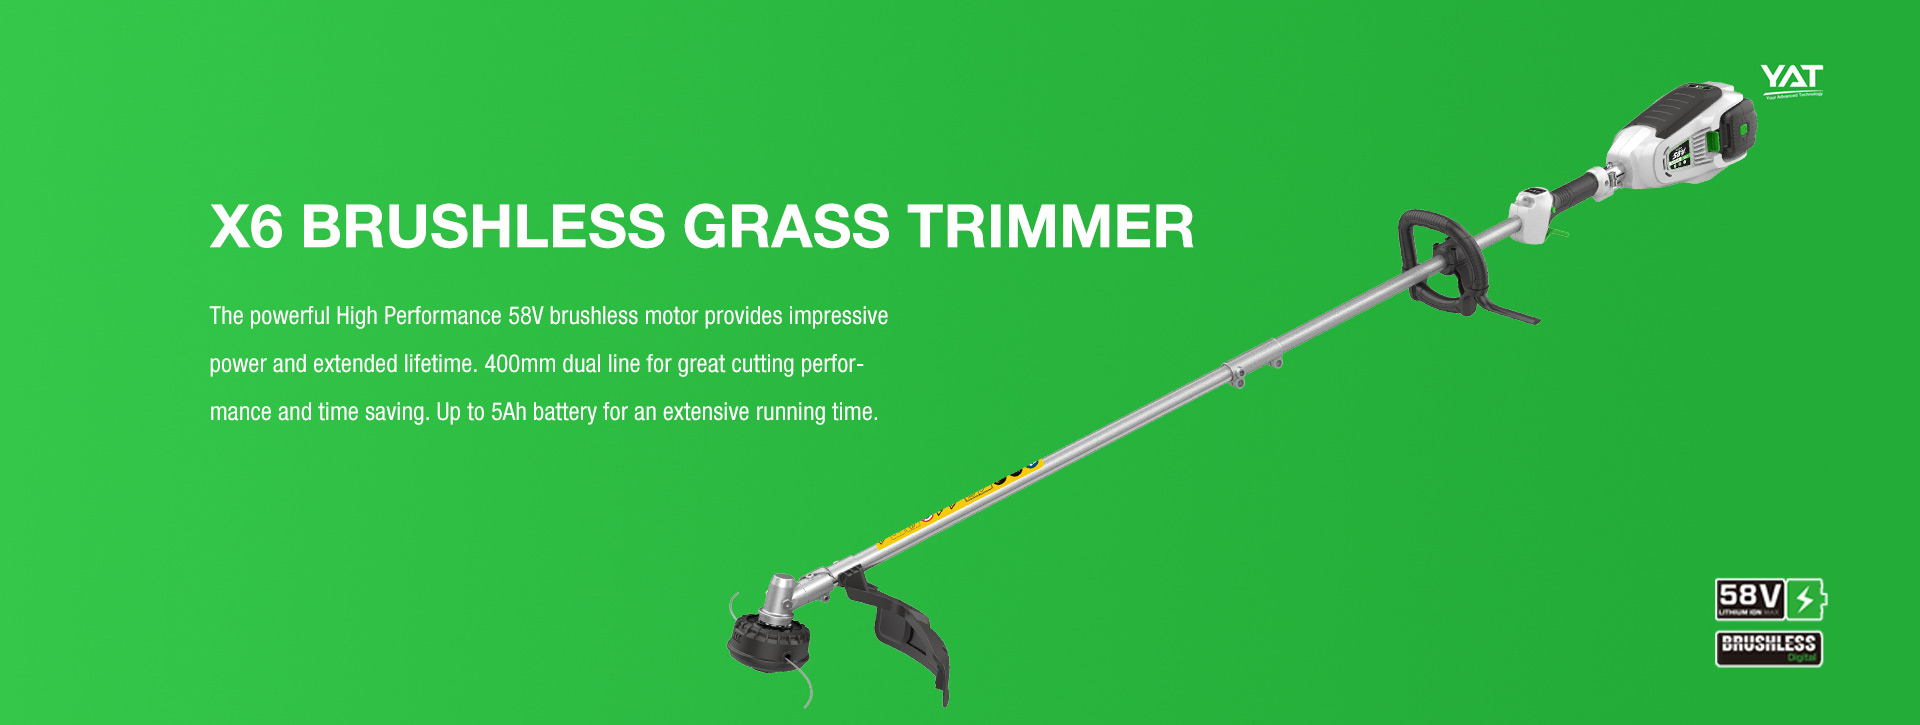 X6 BRUSHLESS GRASS TRIMMER